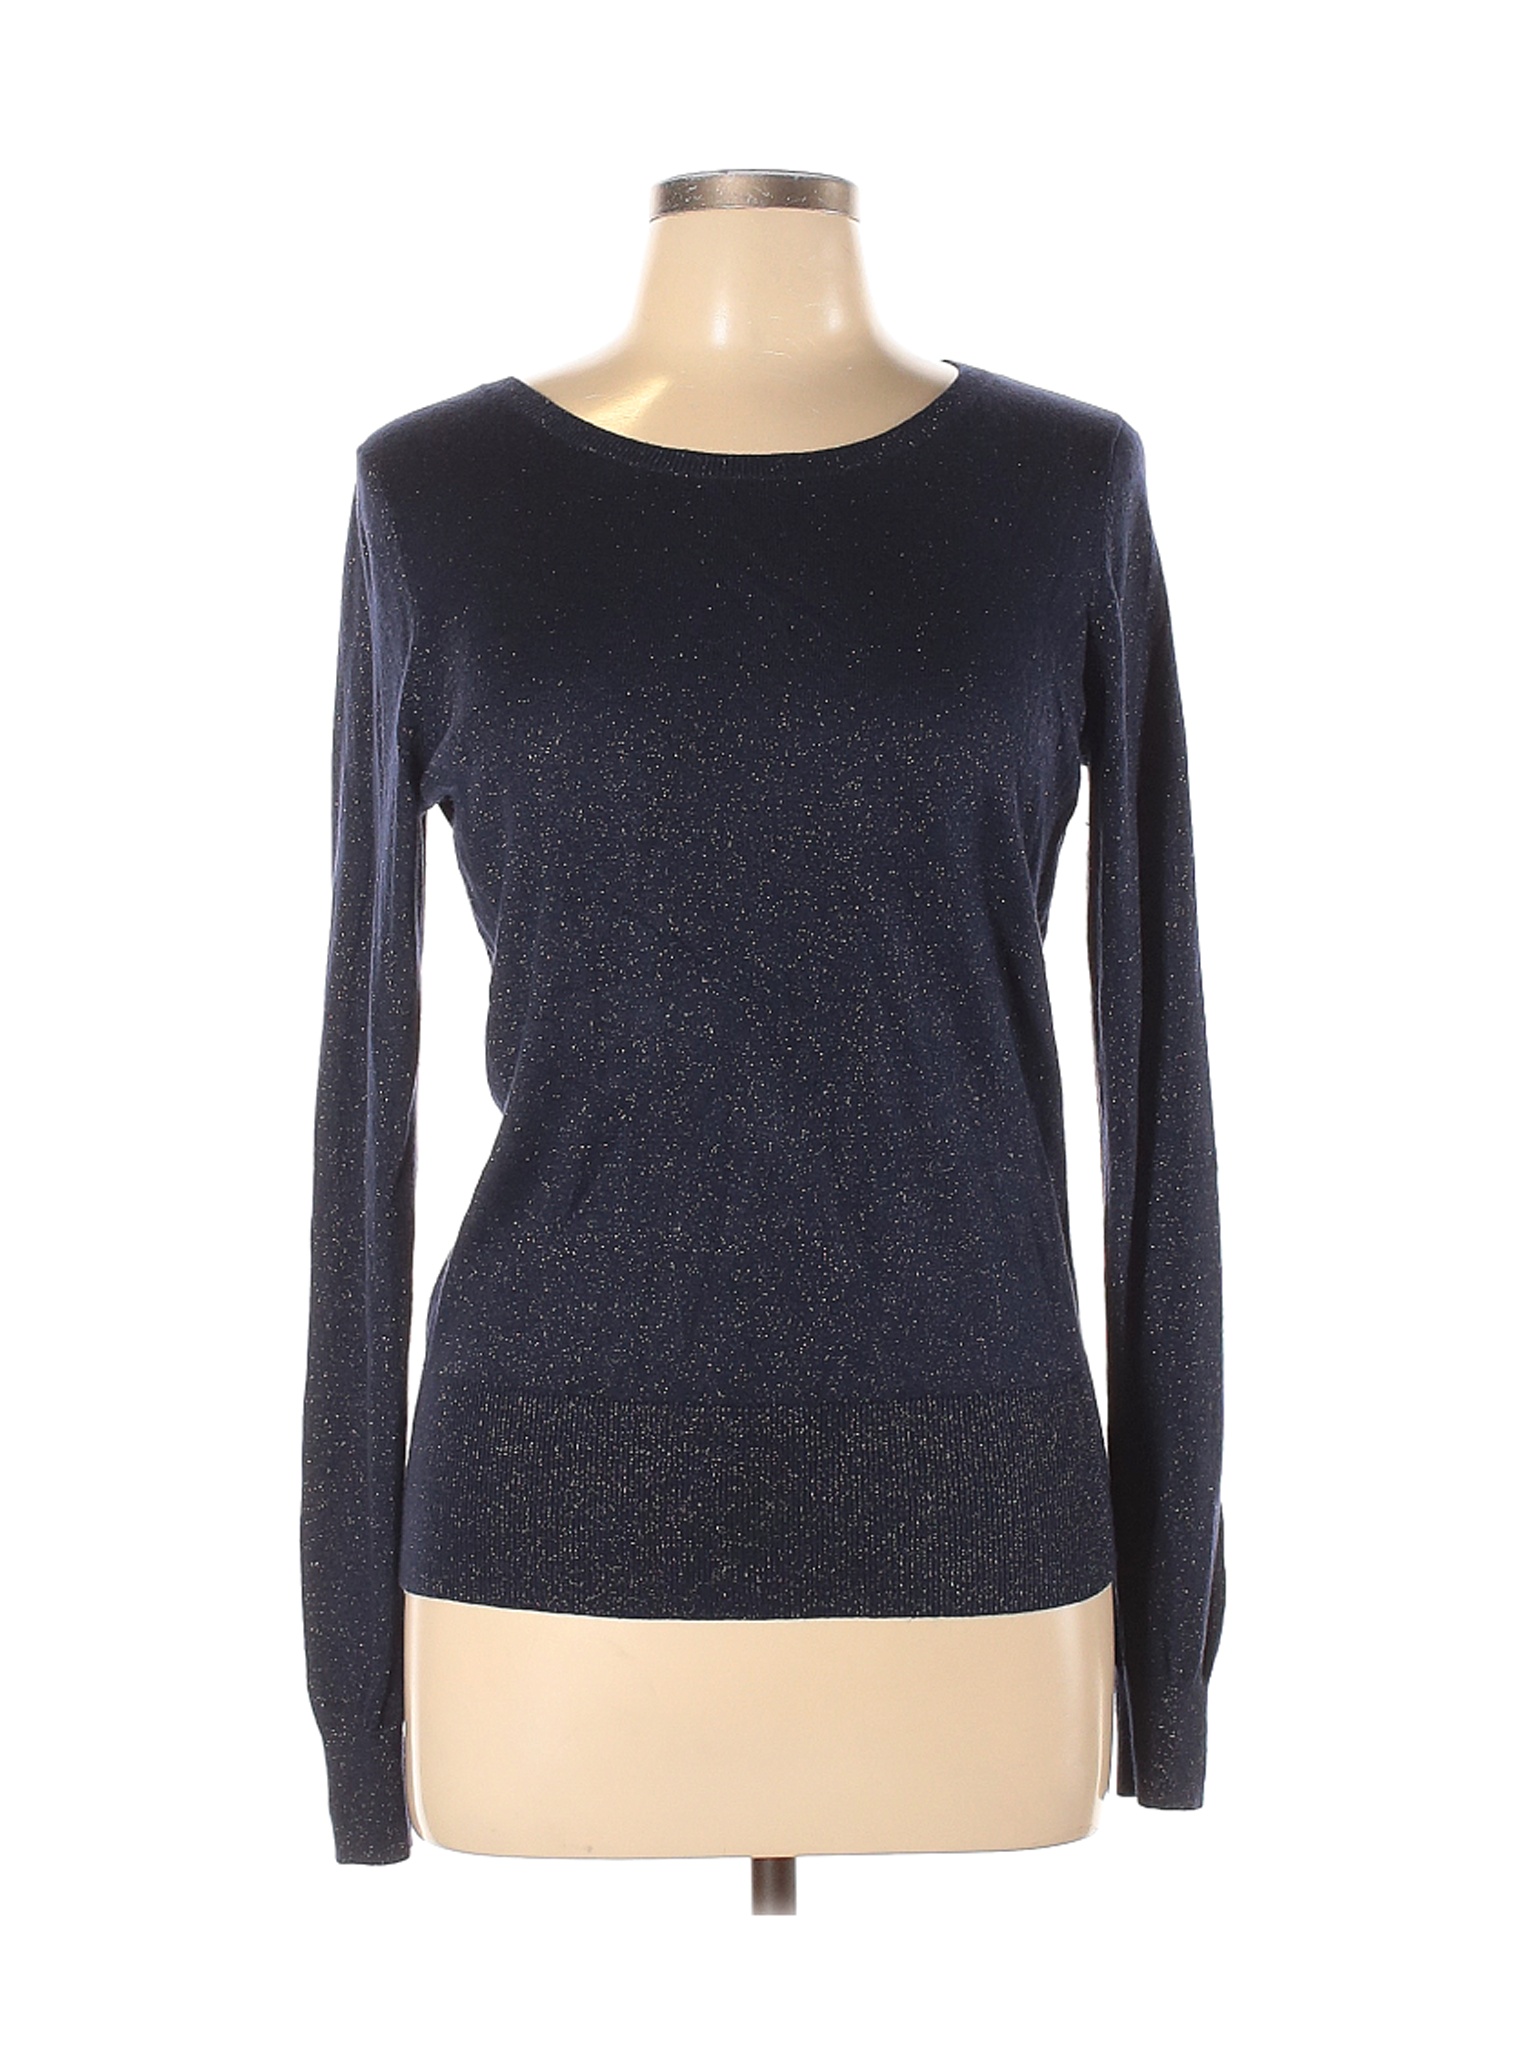 H&M Women Blue Pullover Sweater L | eBay